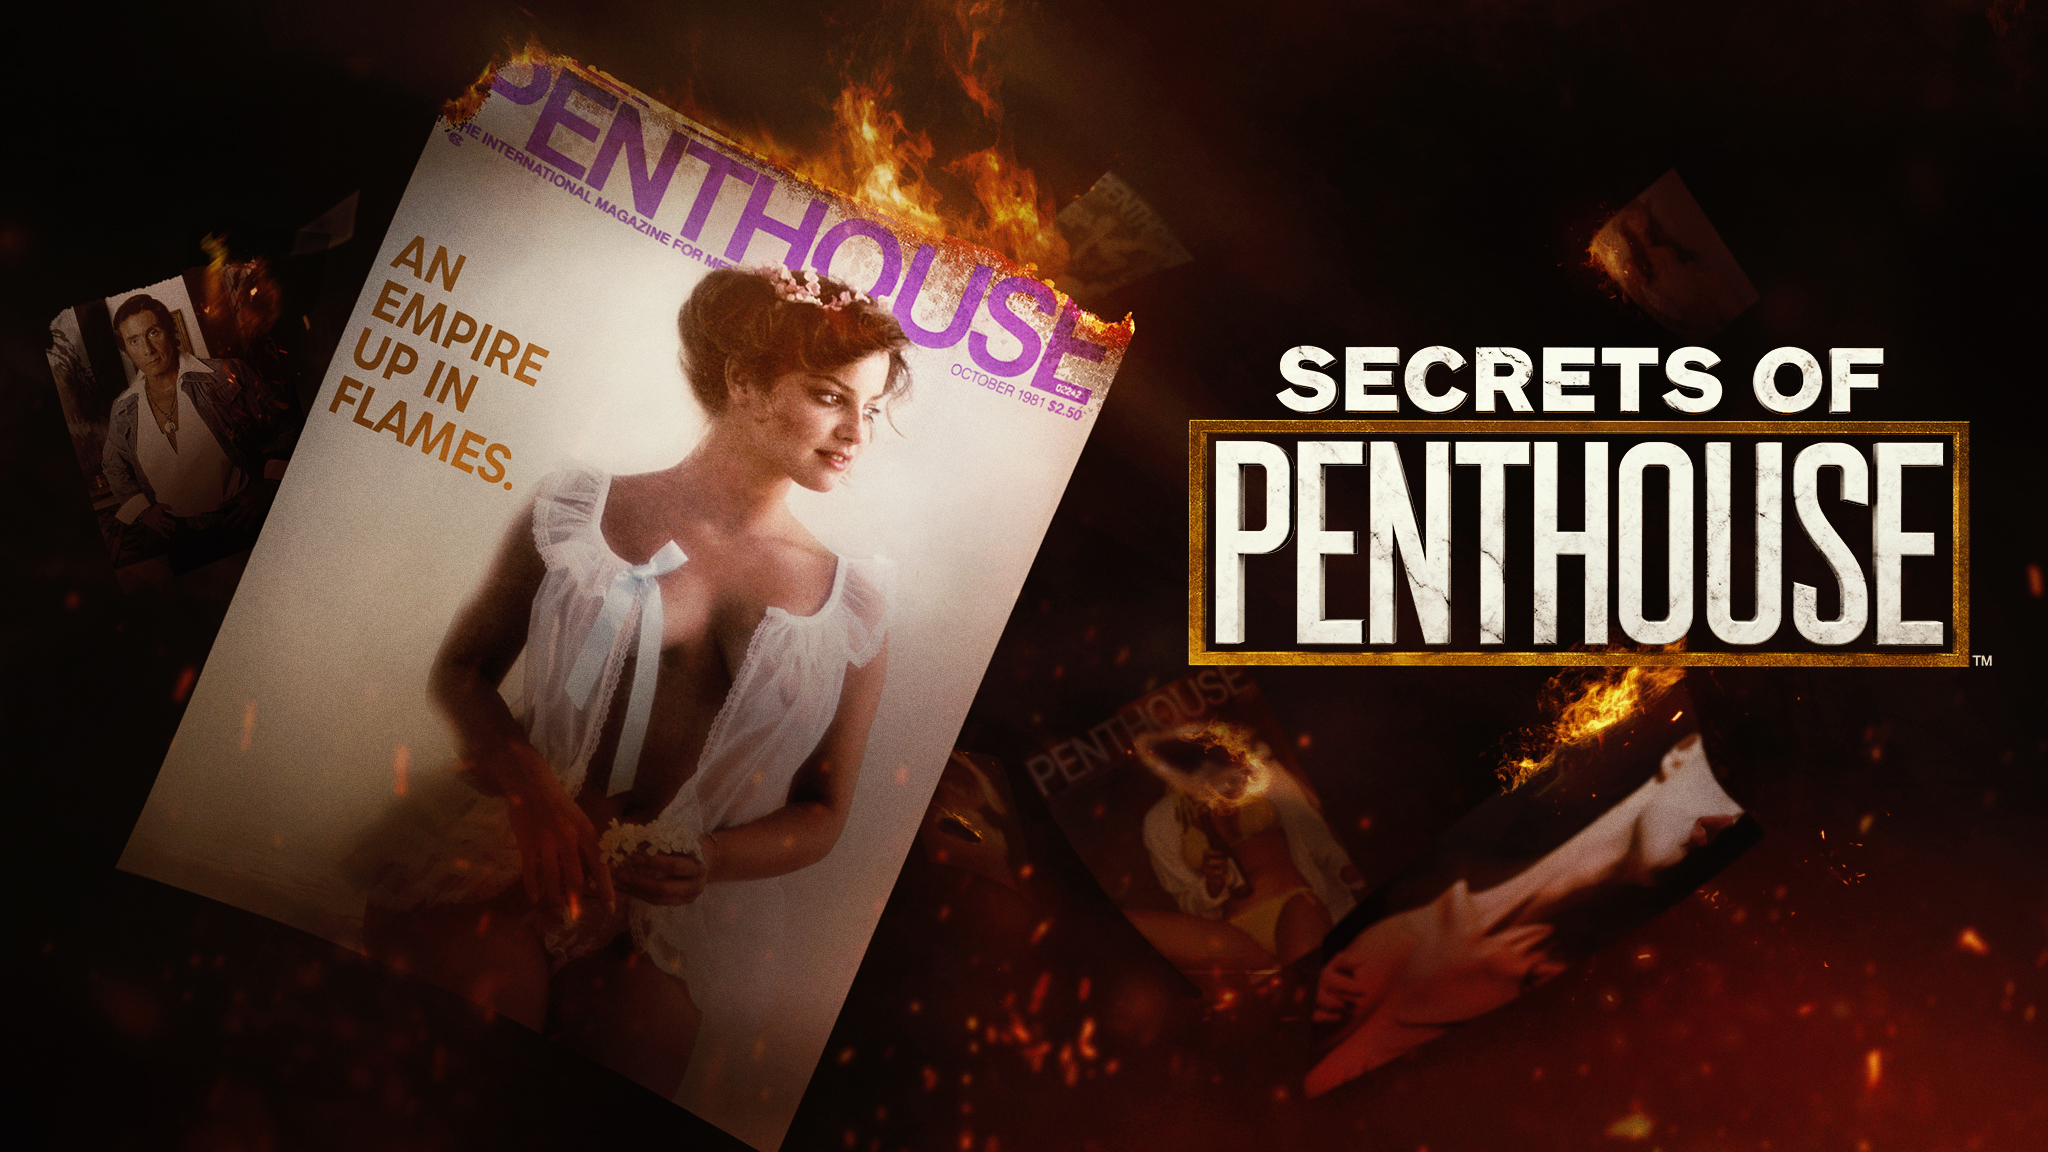 Secrets of Penthouse